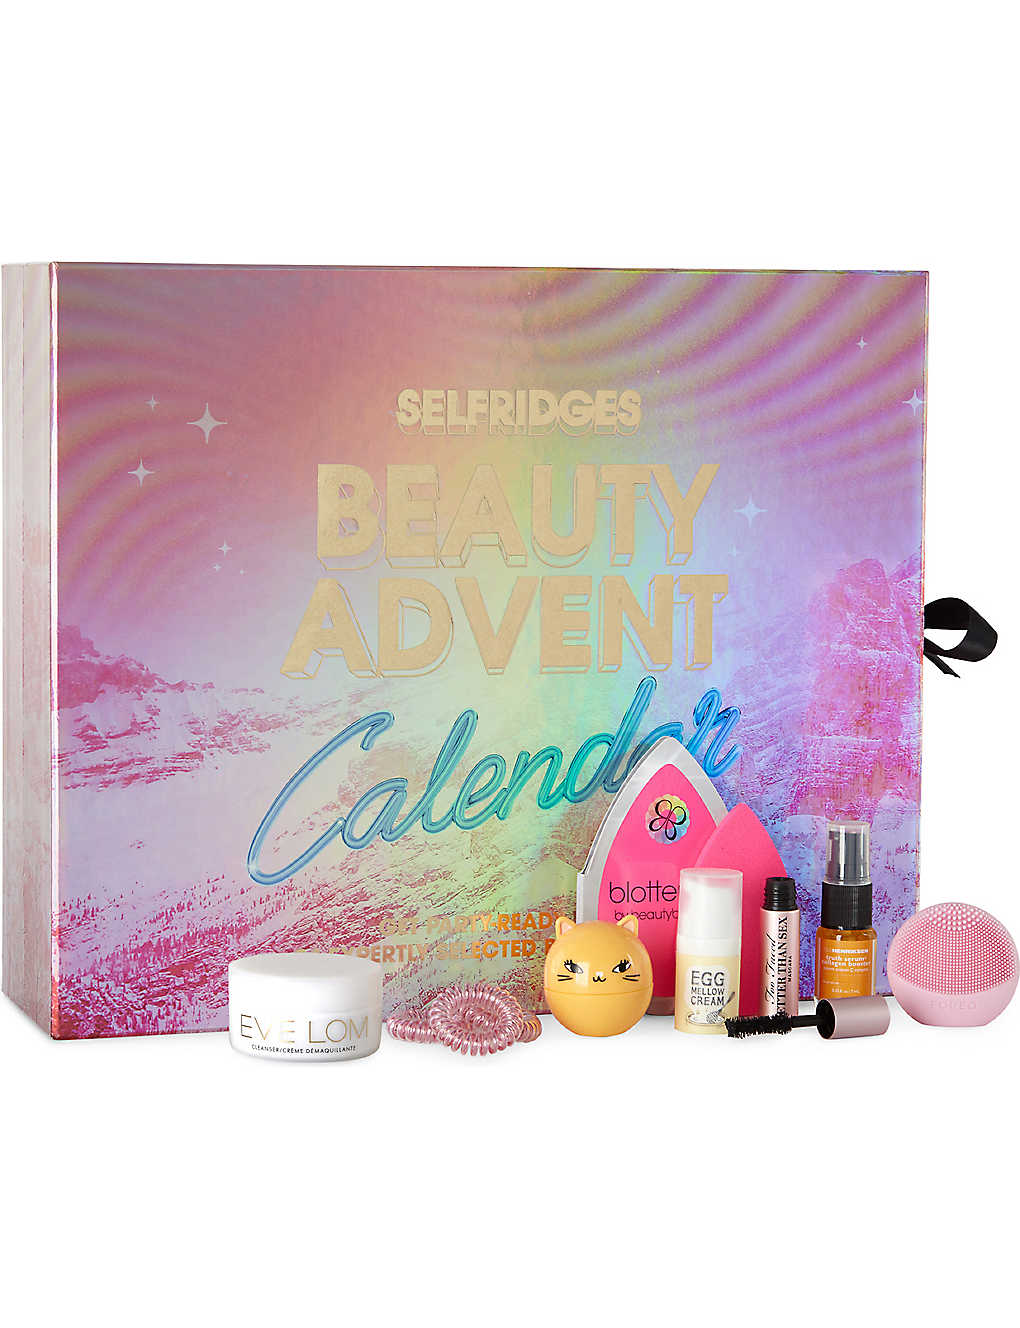 Selfridges Beauty Workshop Advent Calendar 2016 Selfridges Com